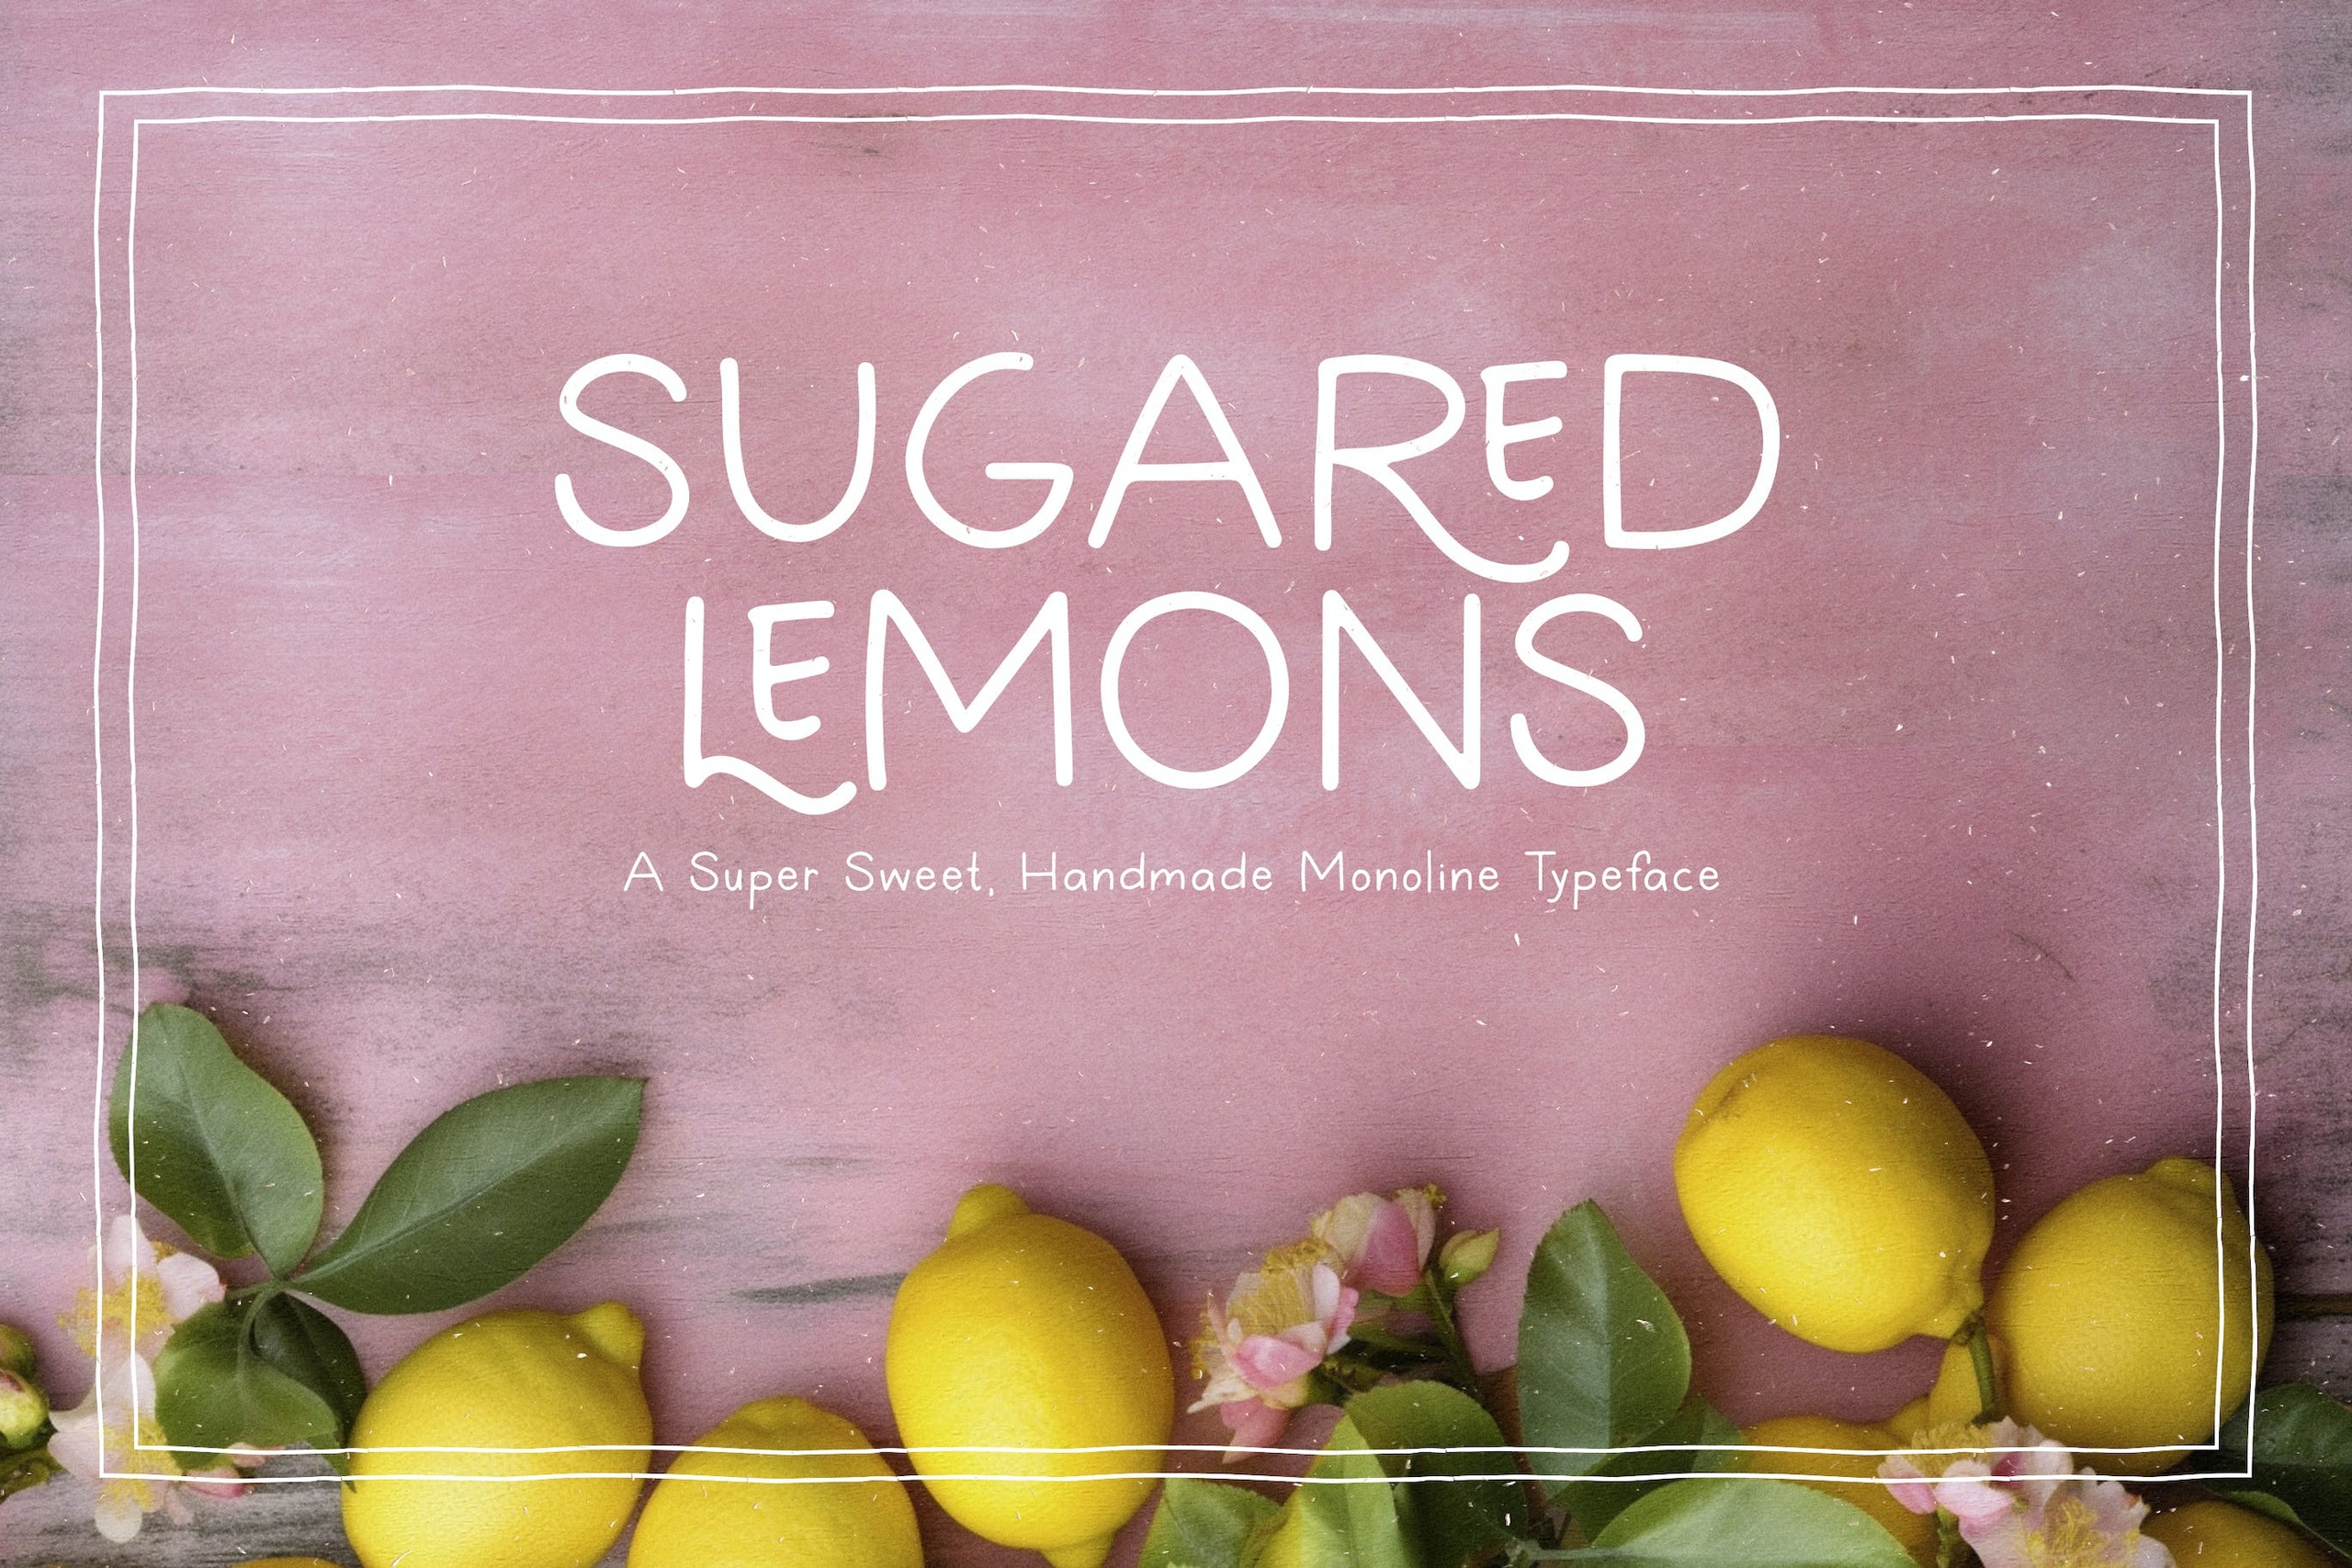 Sugared Lemons